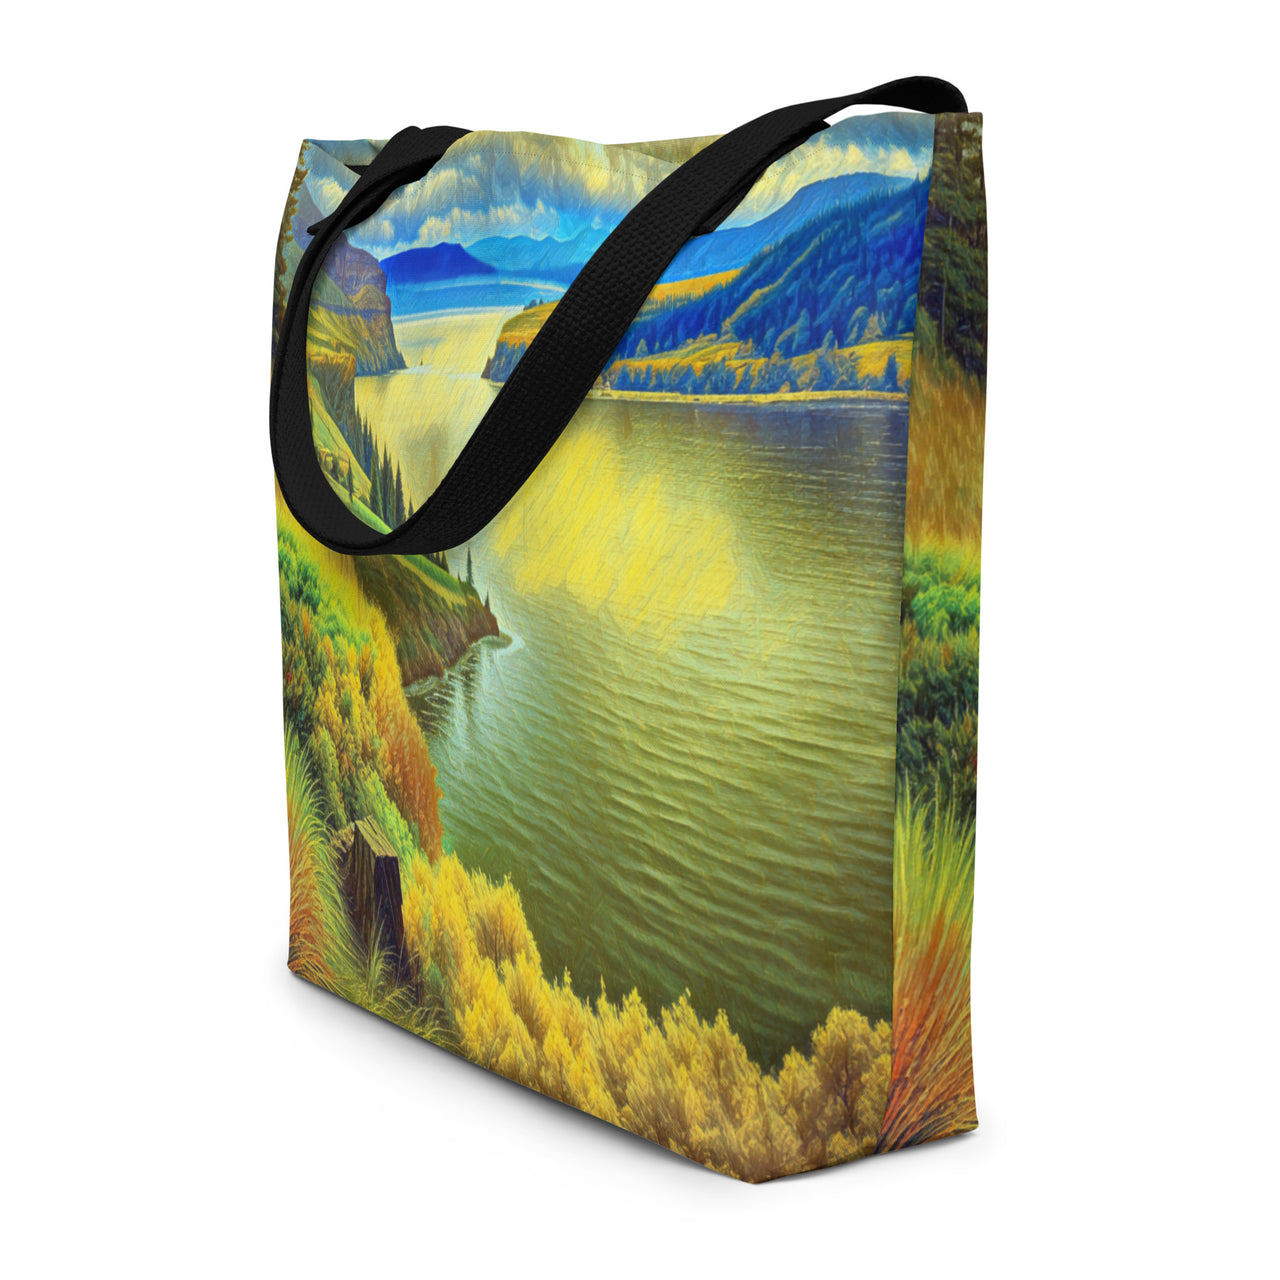 Columbia River Gorge - Digital Art - Large 16x20 Tote Bag W/Pocket